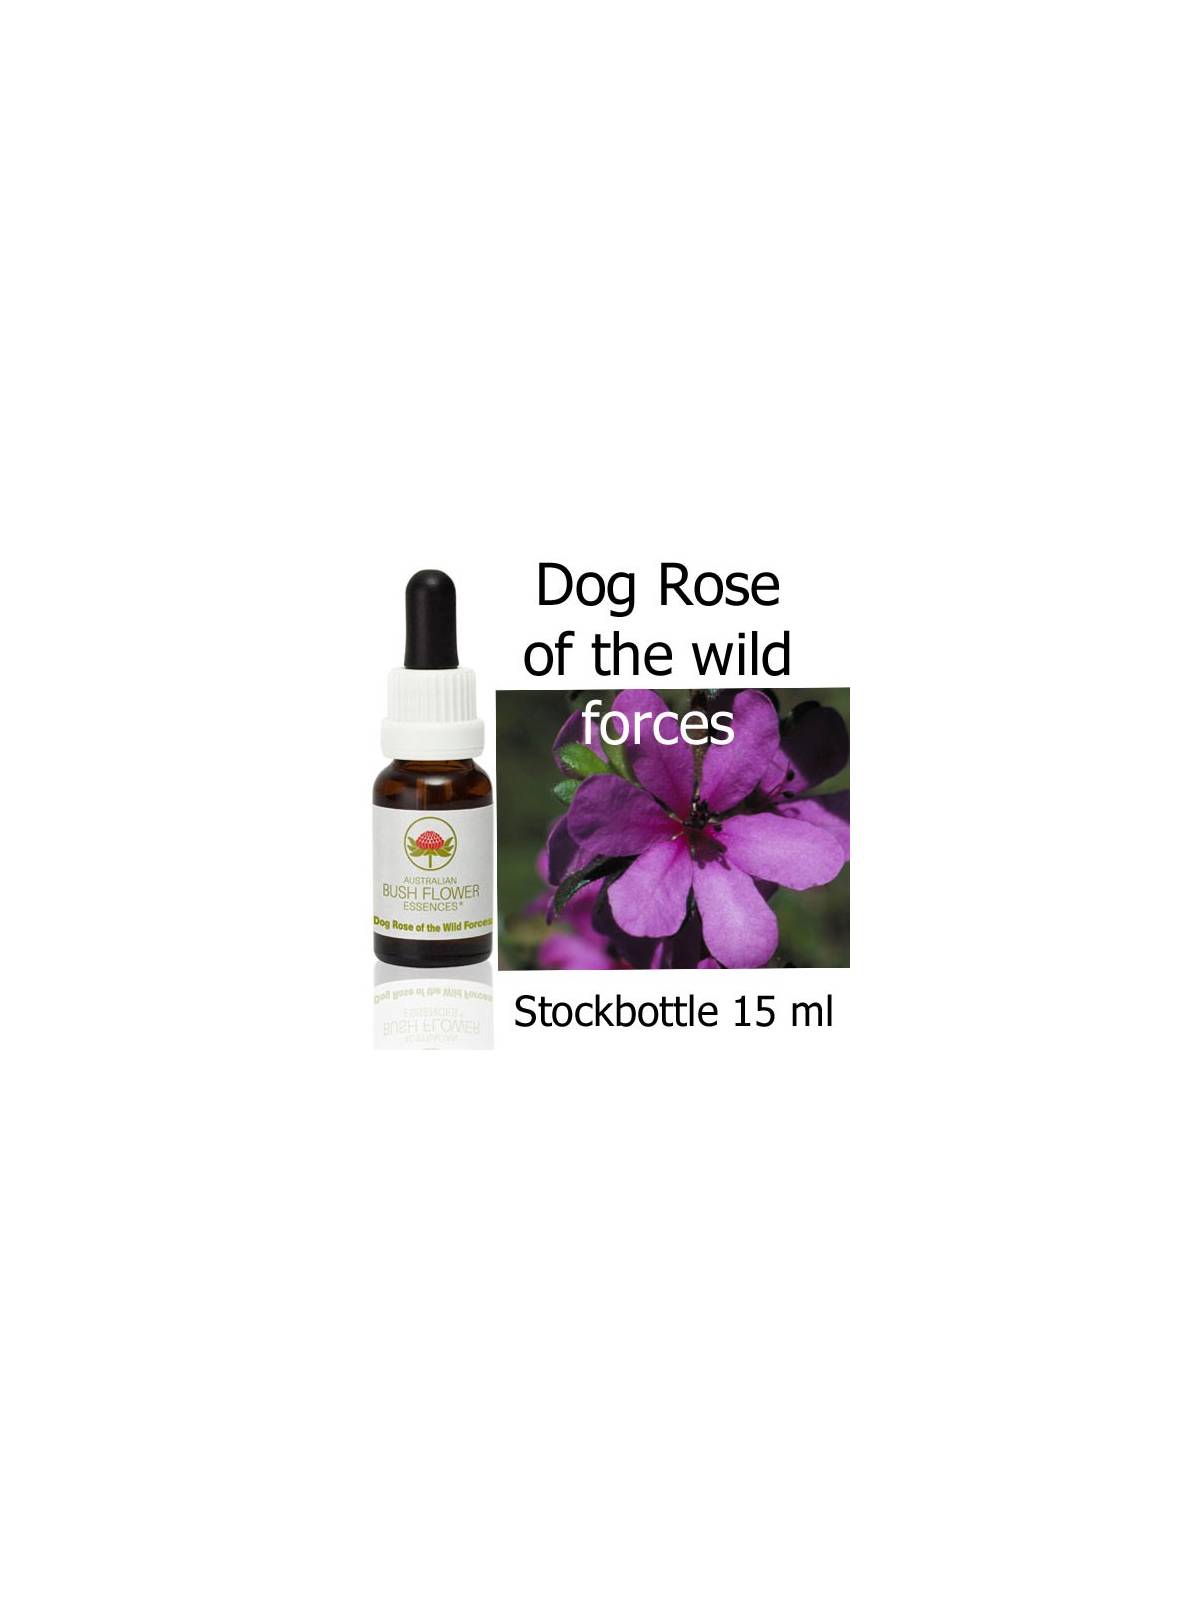 Dog rose of the wild forces Australian Bush Flower Essences stockbottles